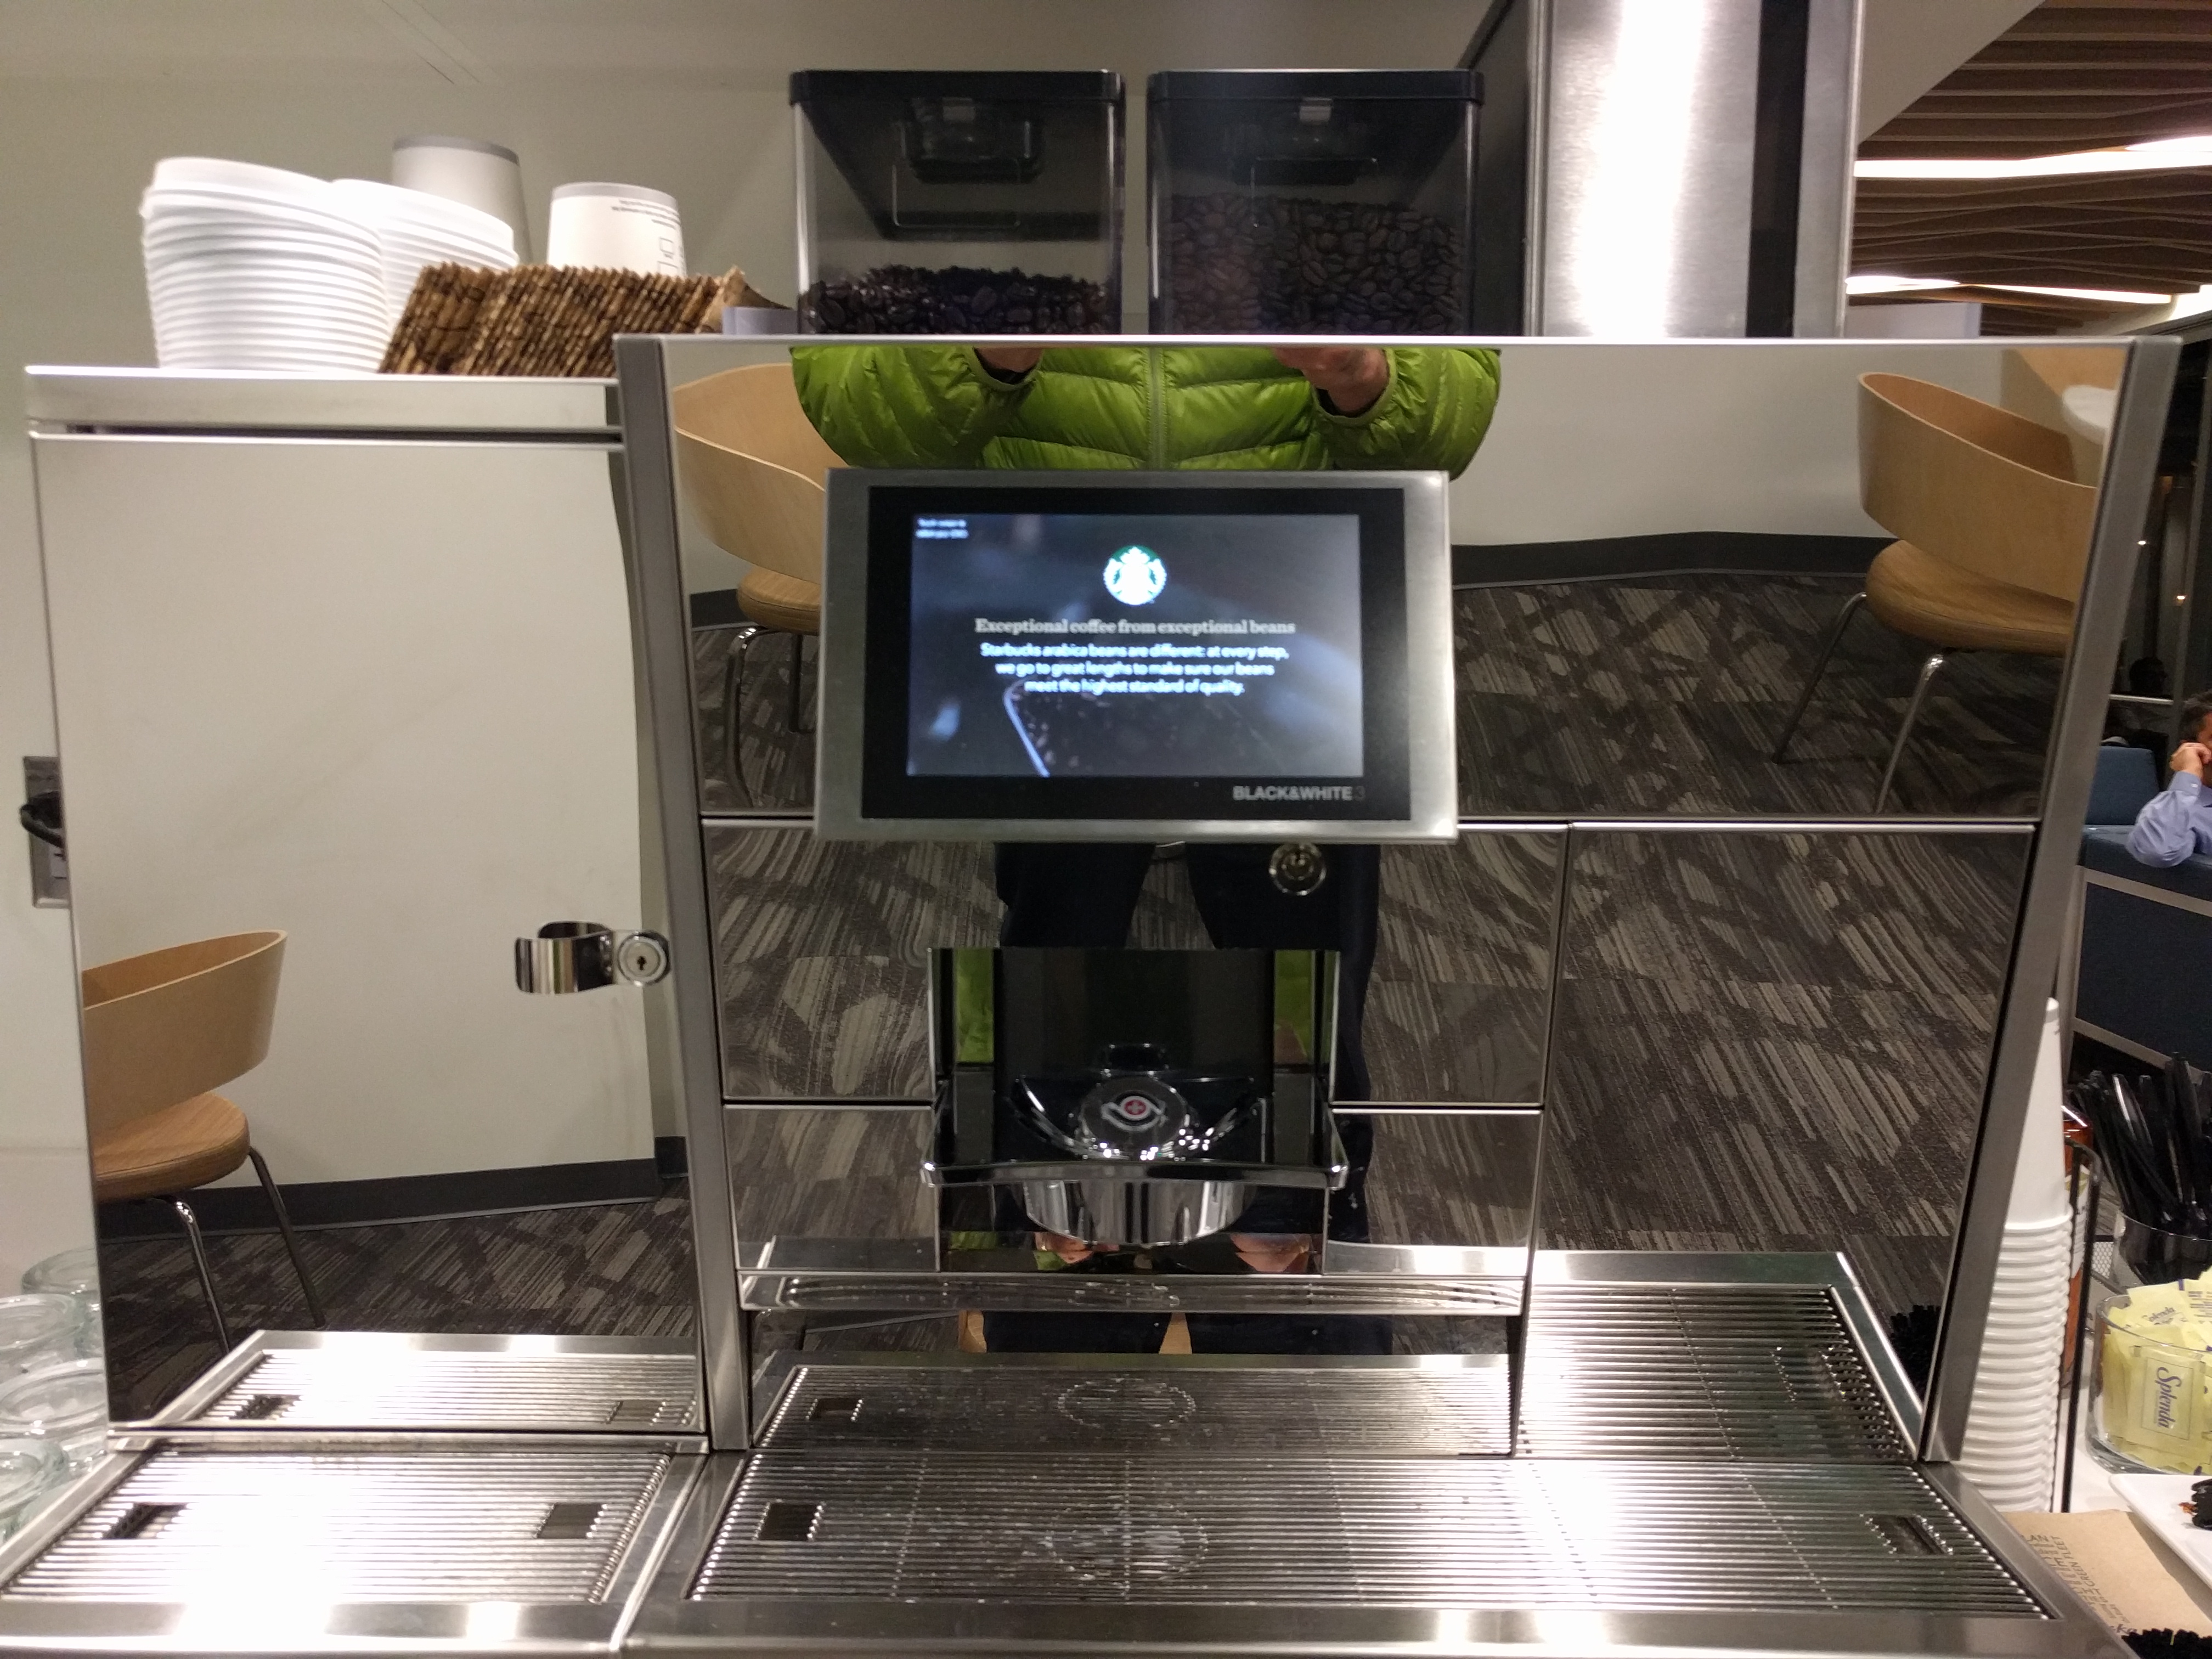 Starbucks Coffee Machine Inside The New Alaska Airlines